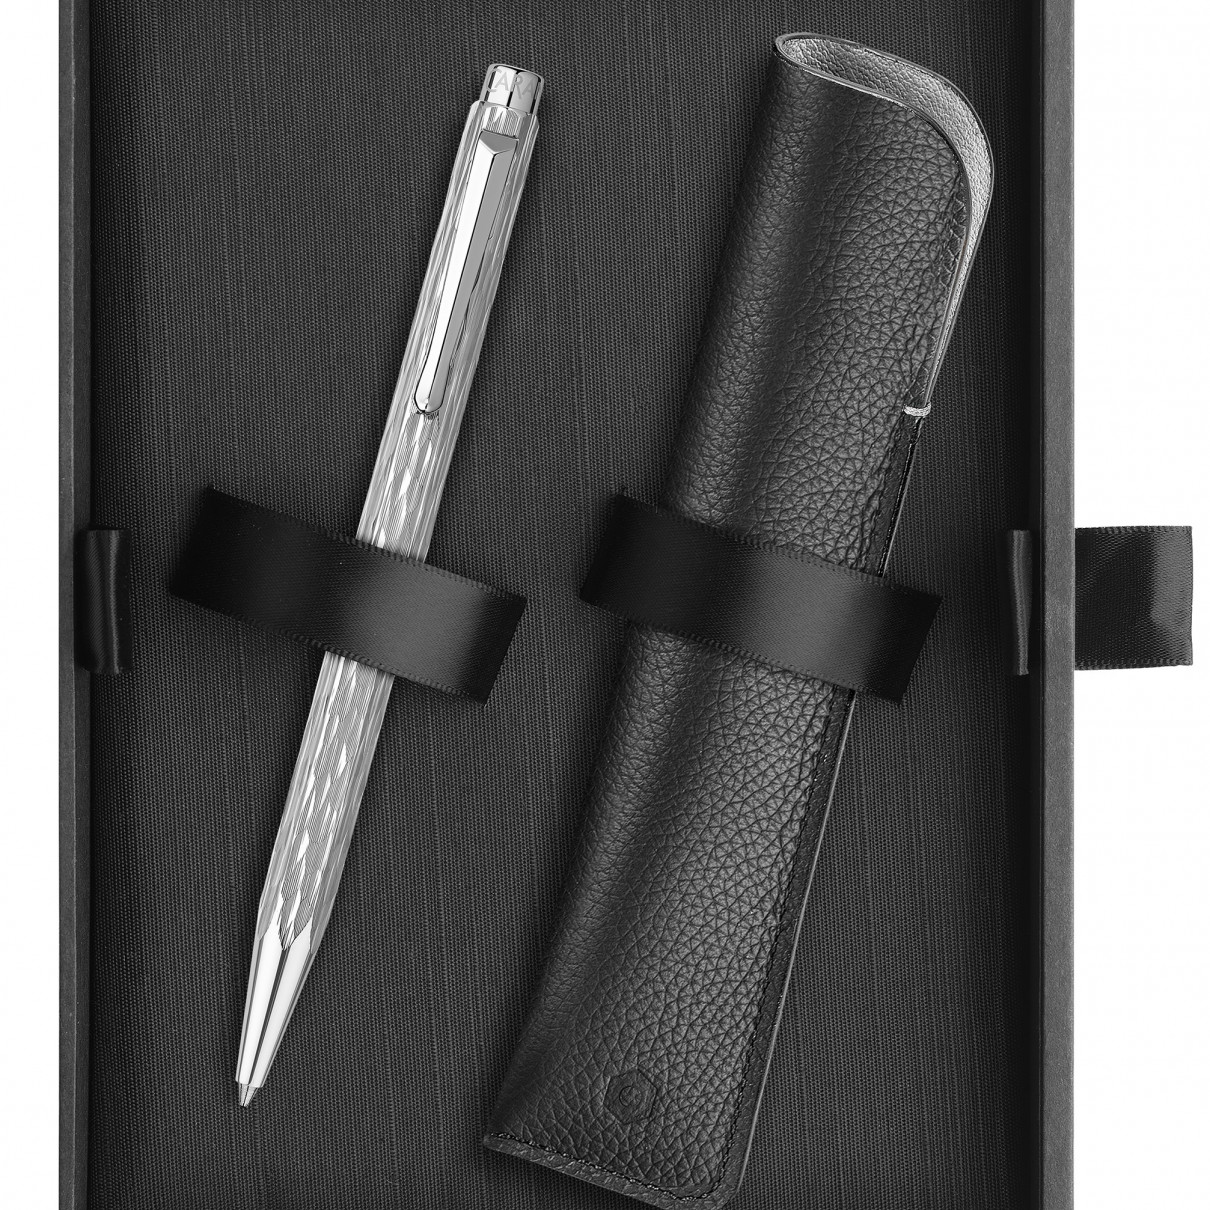 Caran d'Ache Ecridor Ballpoint Pen & Leather Case Set - "Venetian" Palladium Coated